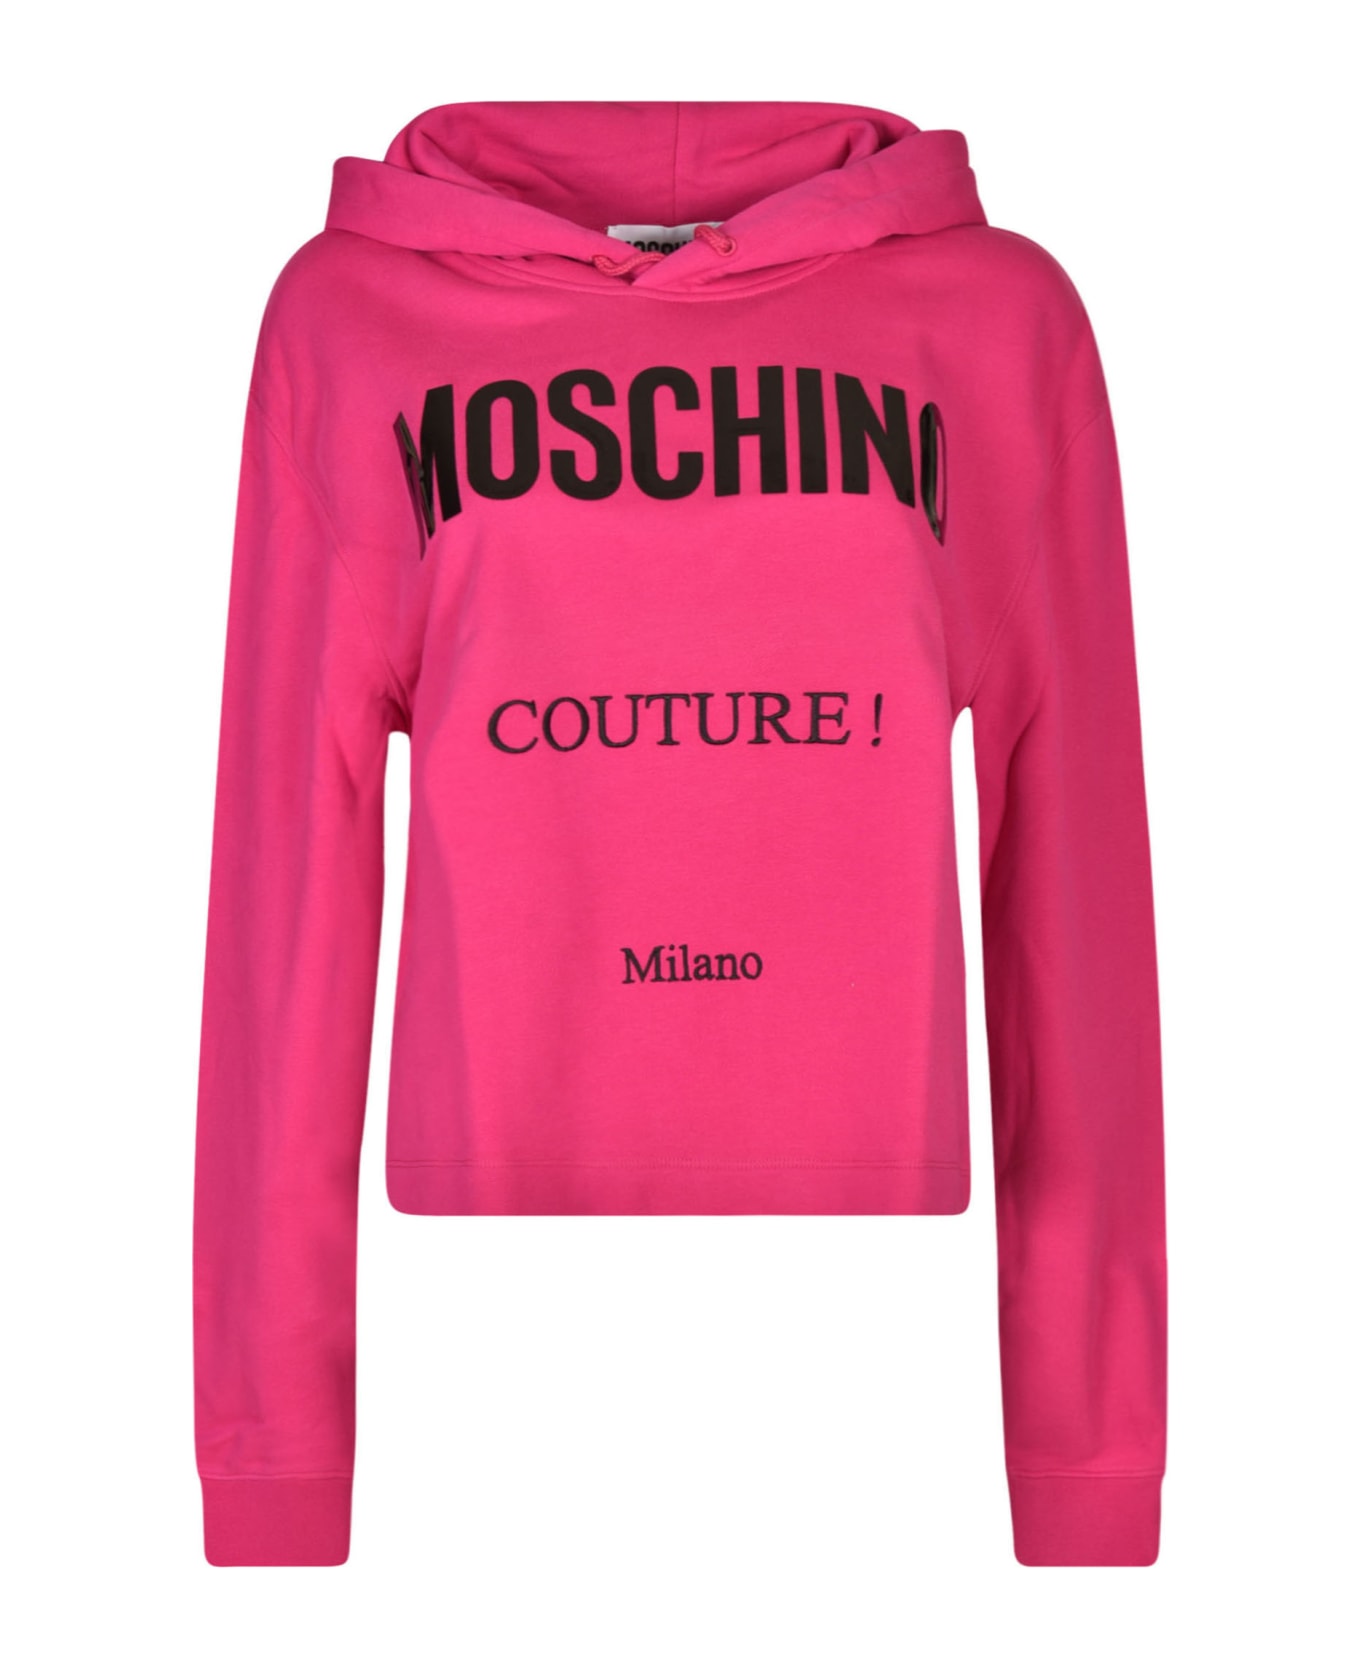 Moschino Couture Hooded Sweatshirt - Purple